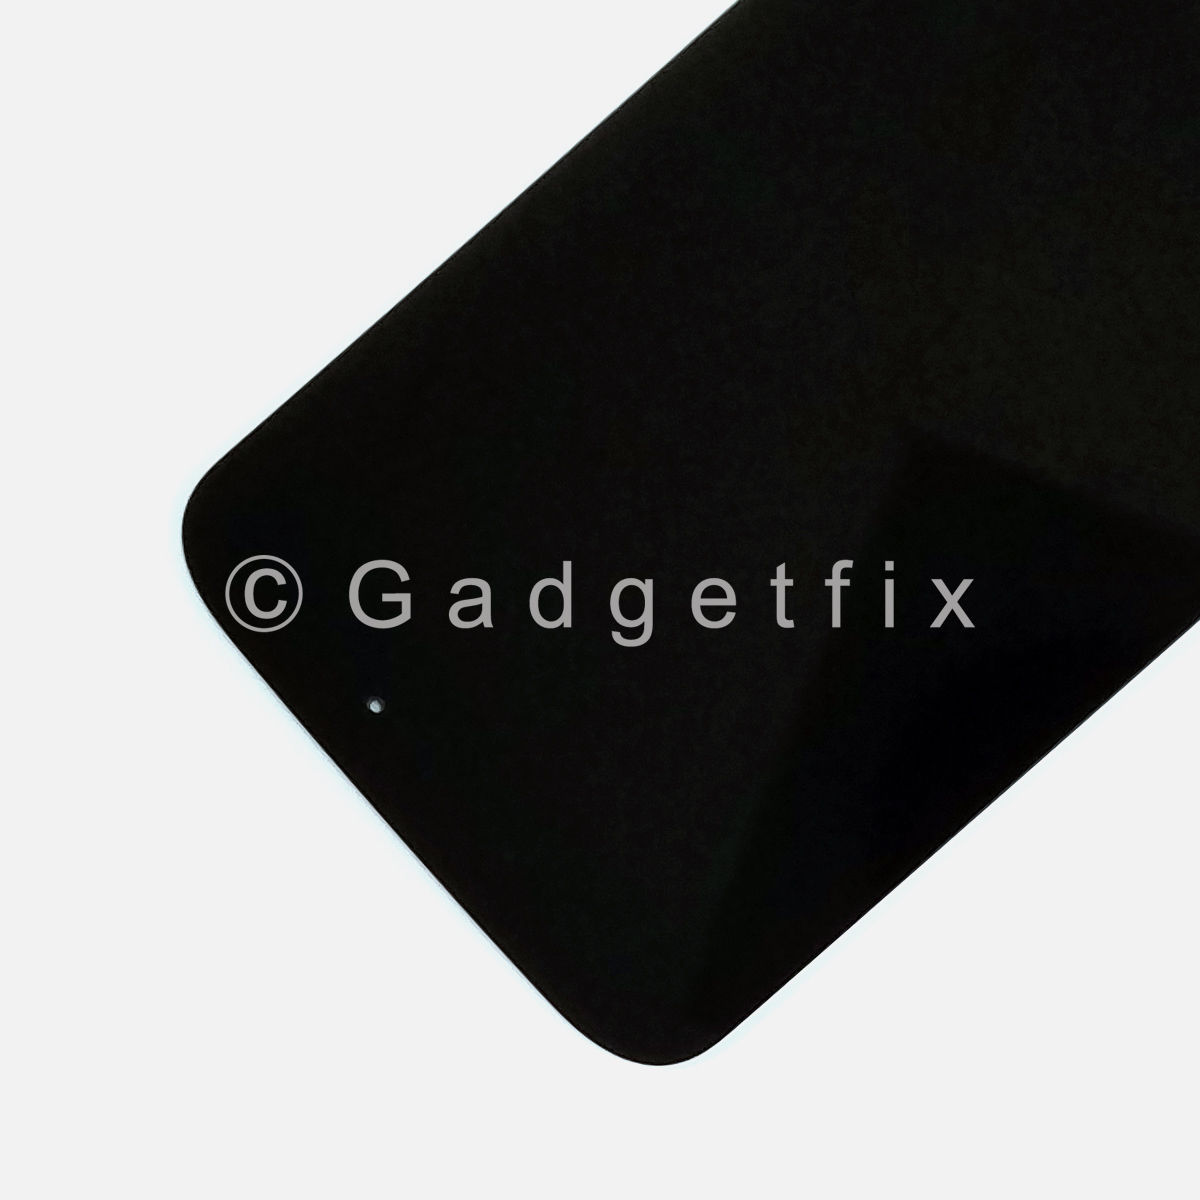 Touch Screen Digitizer Panel LCD Screen Display For Motorola Moto G4 LTE XT1625